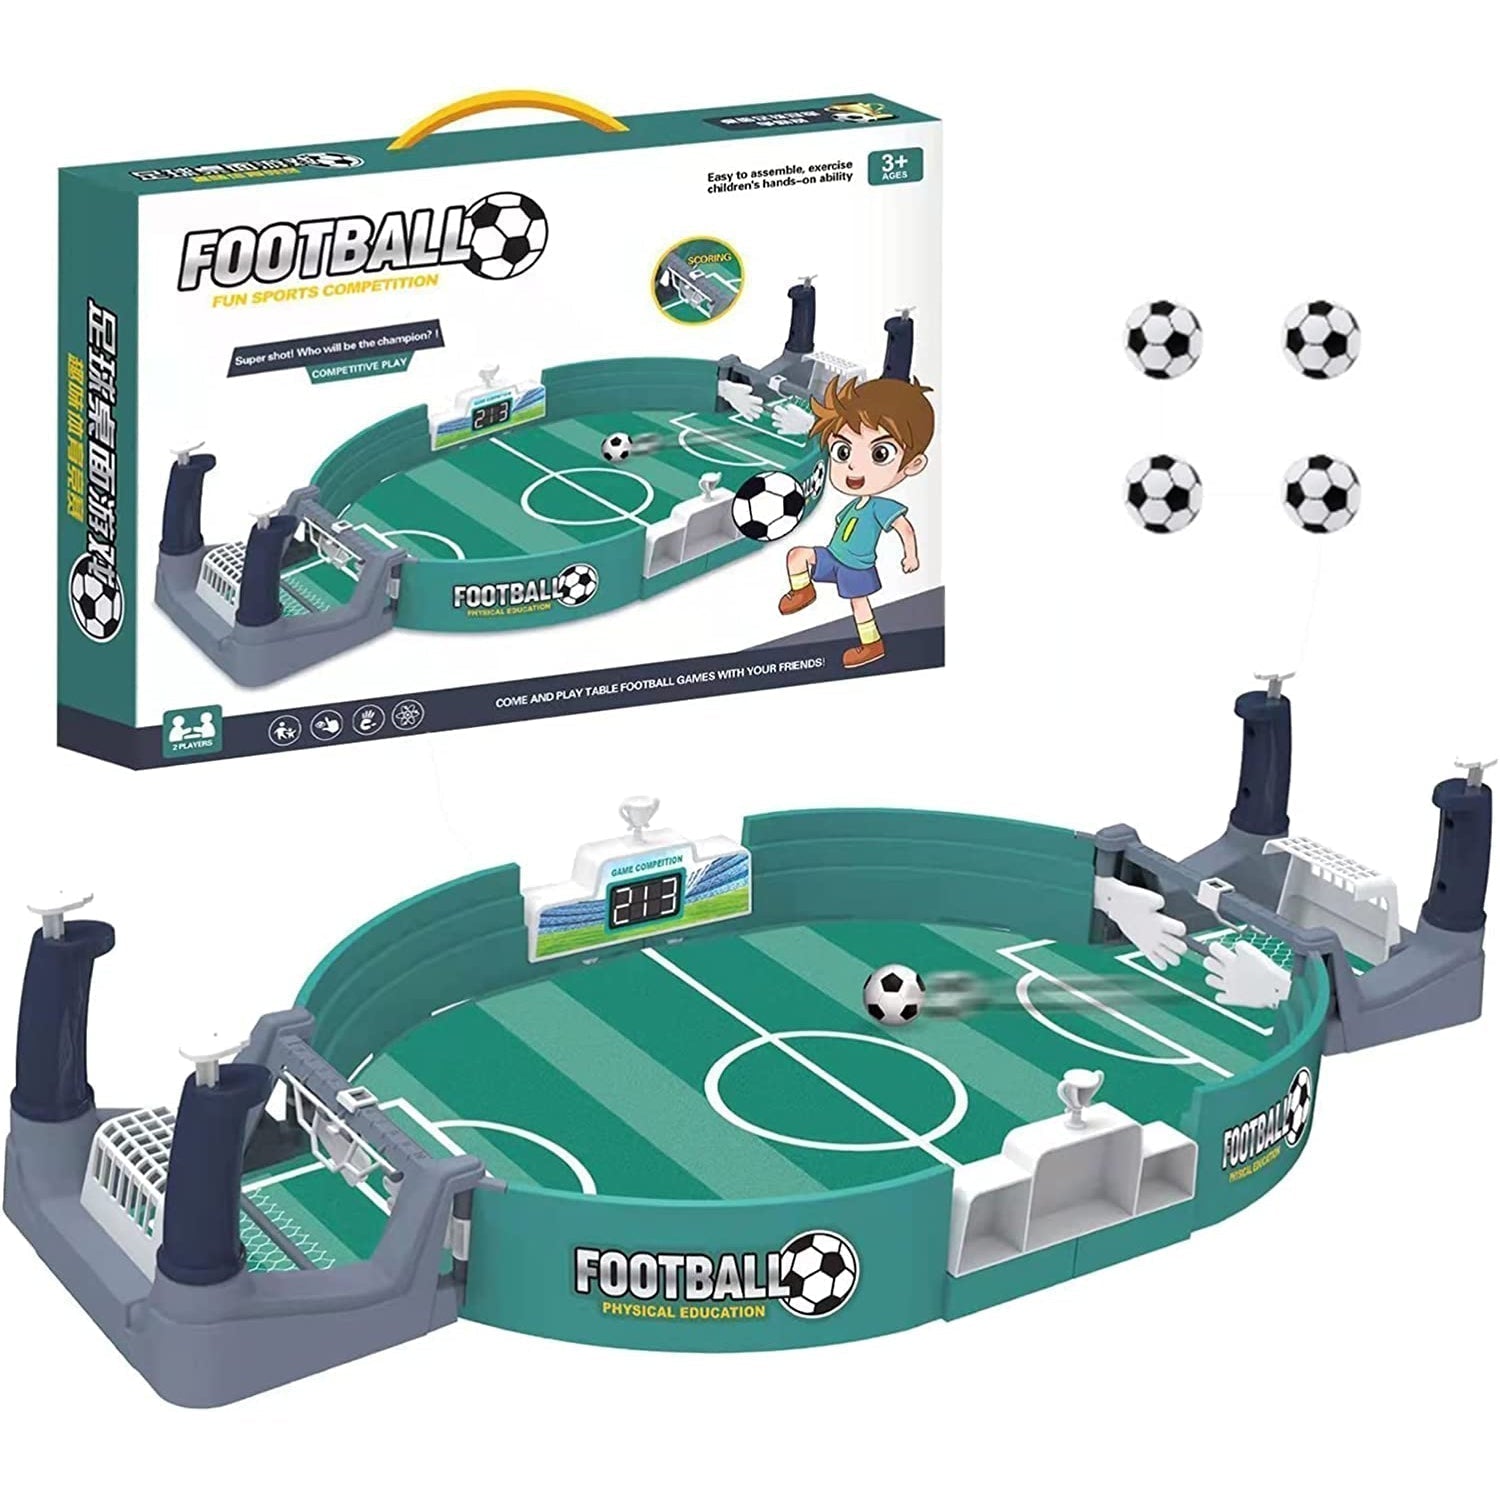 Table Football Game Set for Kids